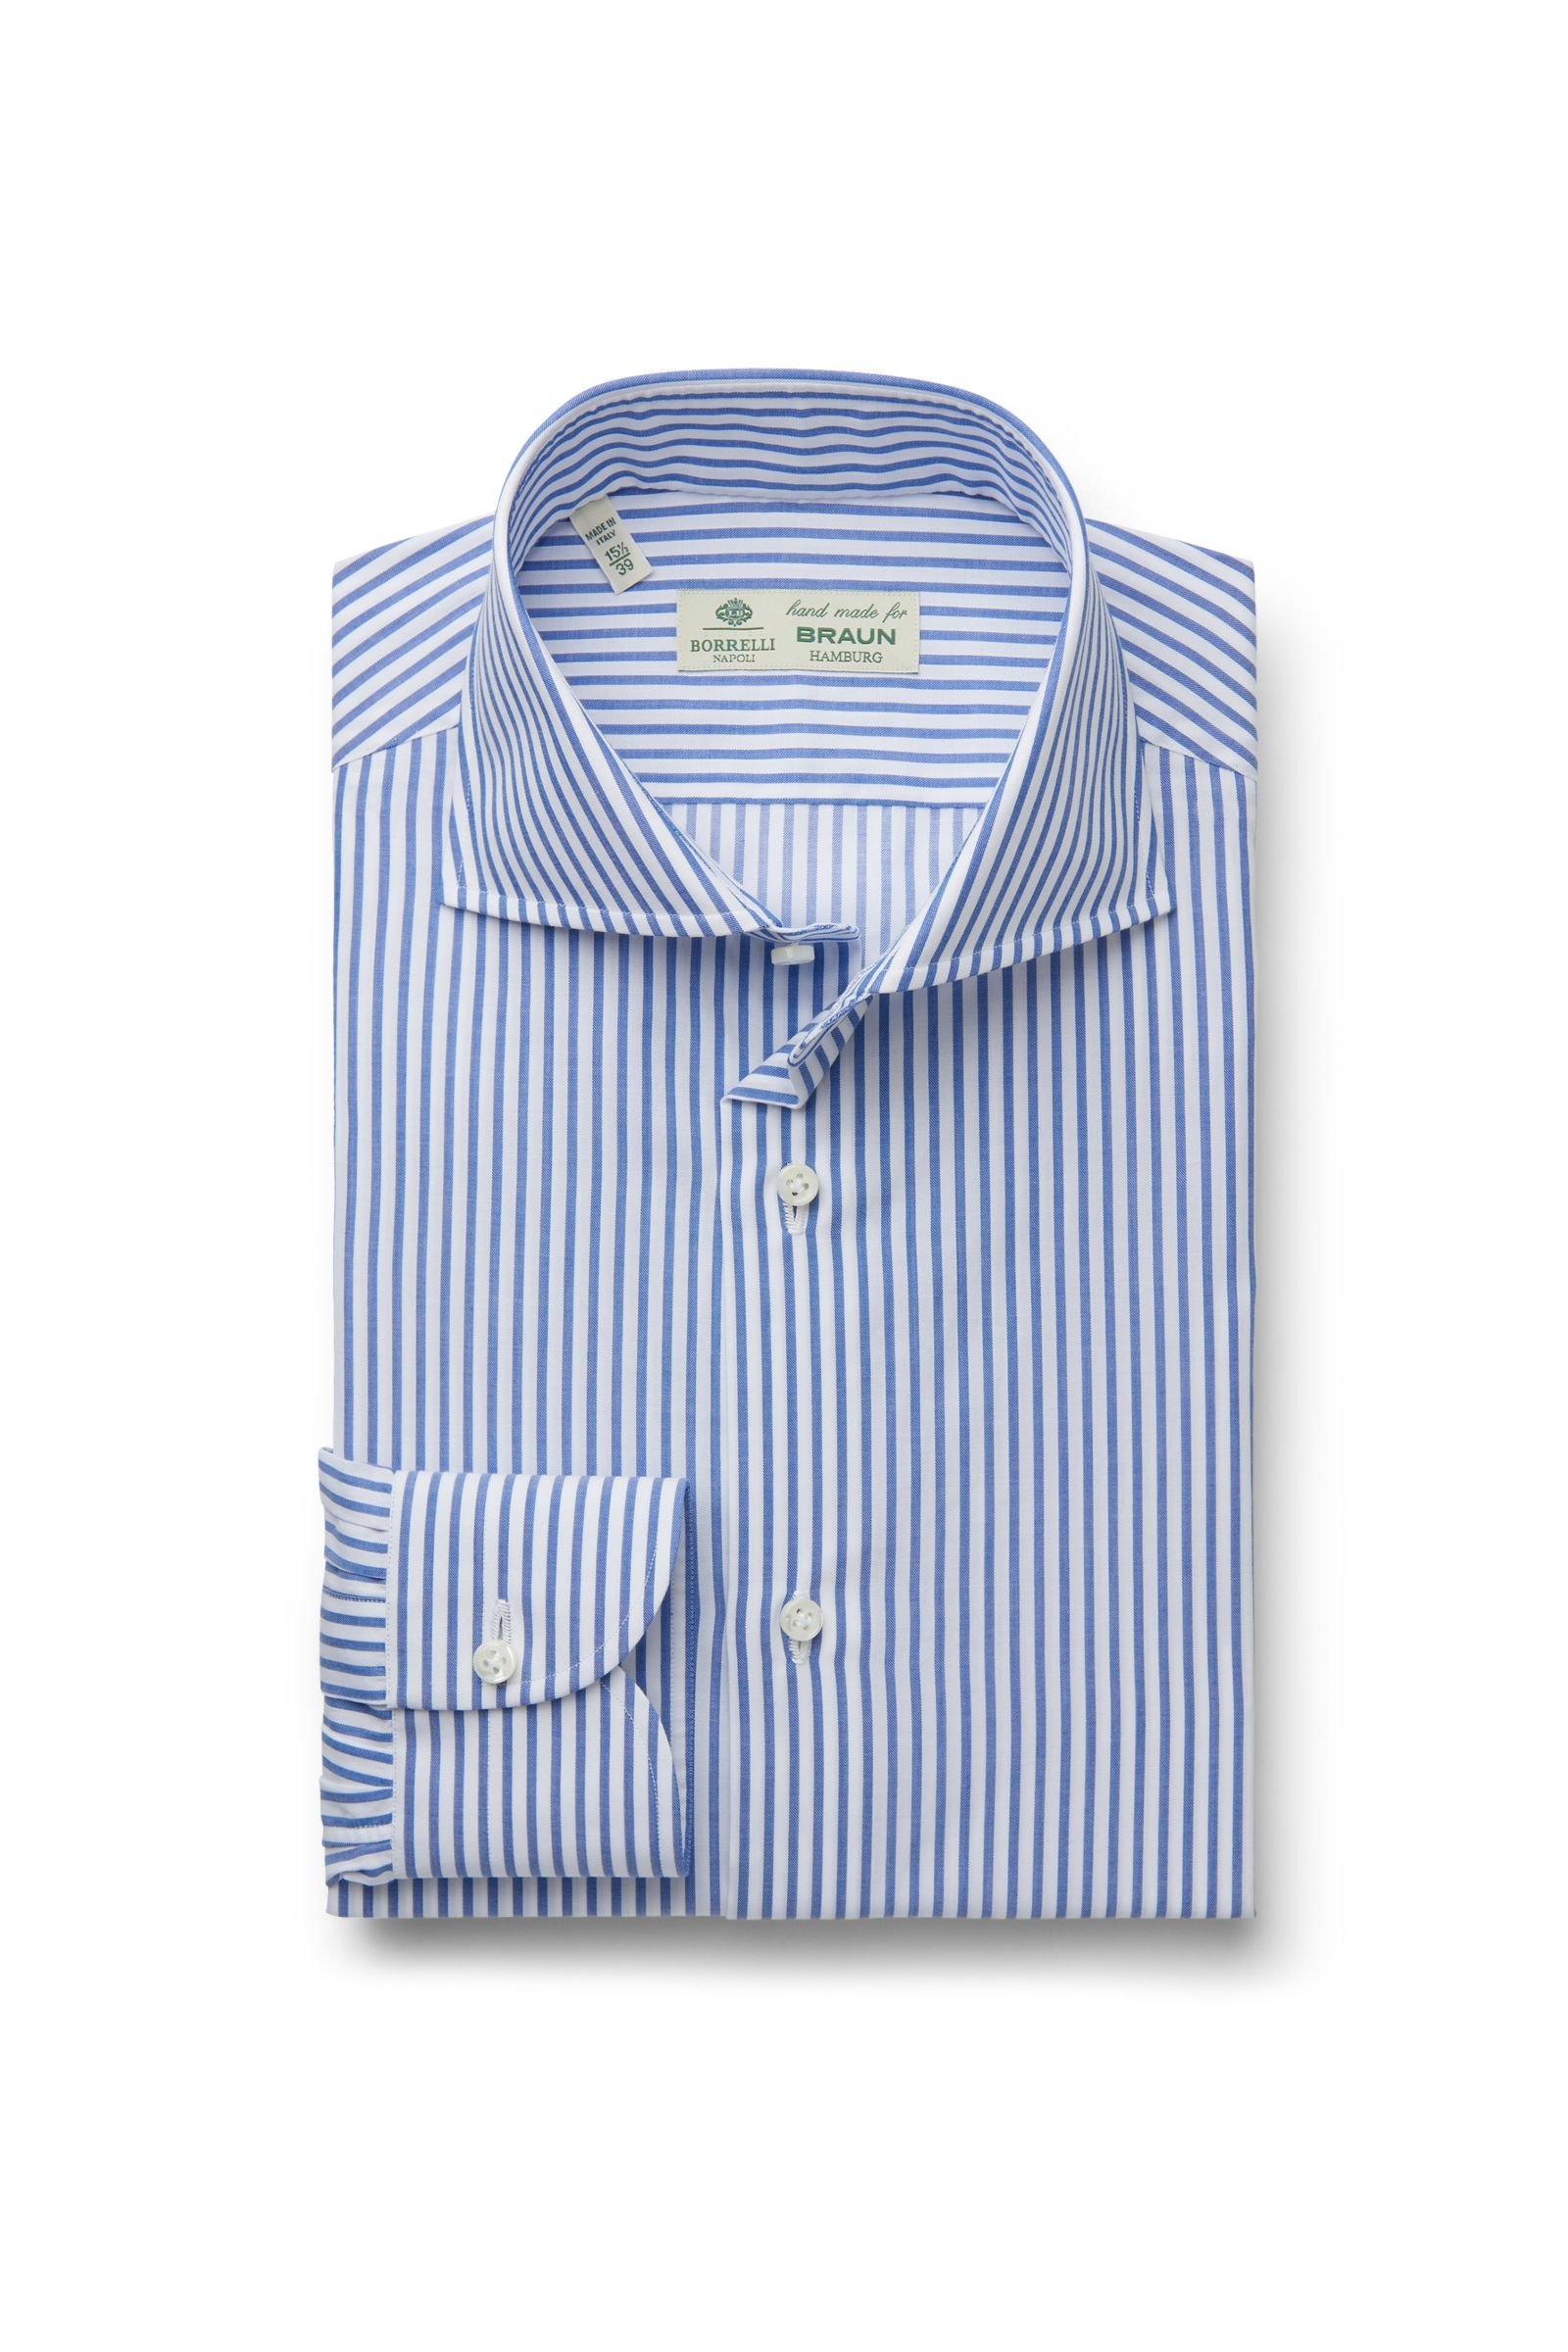 Business shirt 'Nando' shark collar blue striped